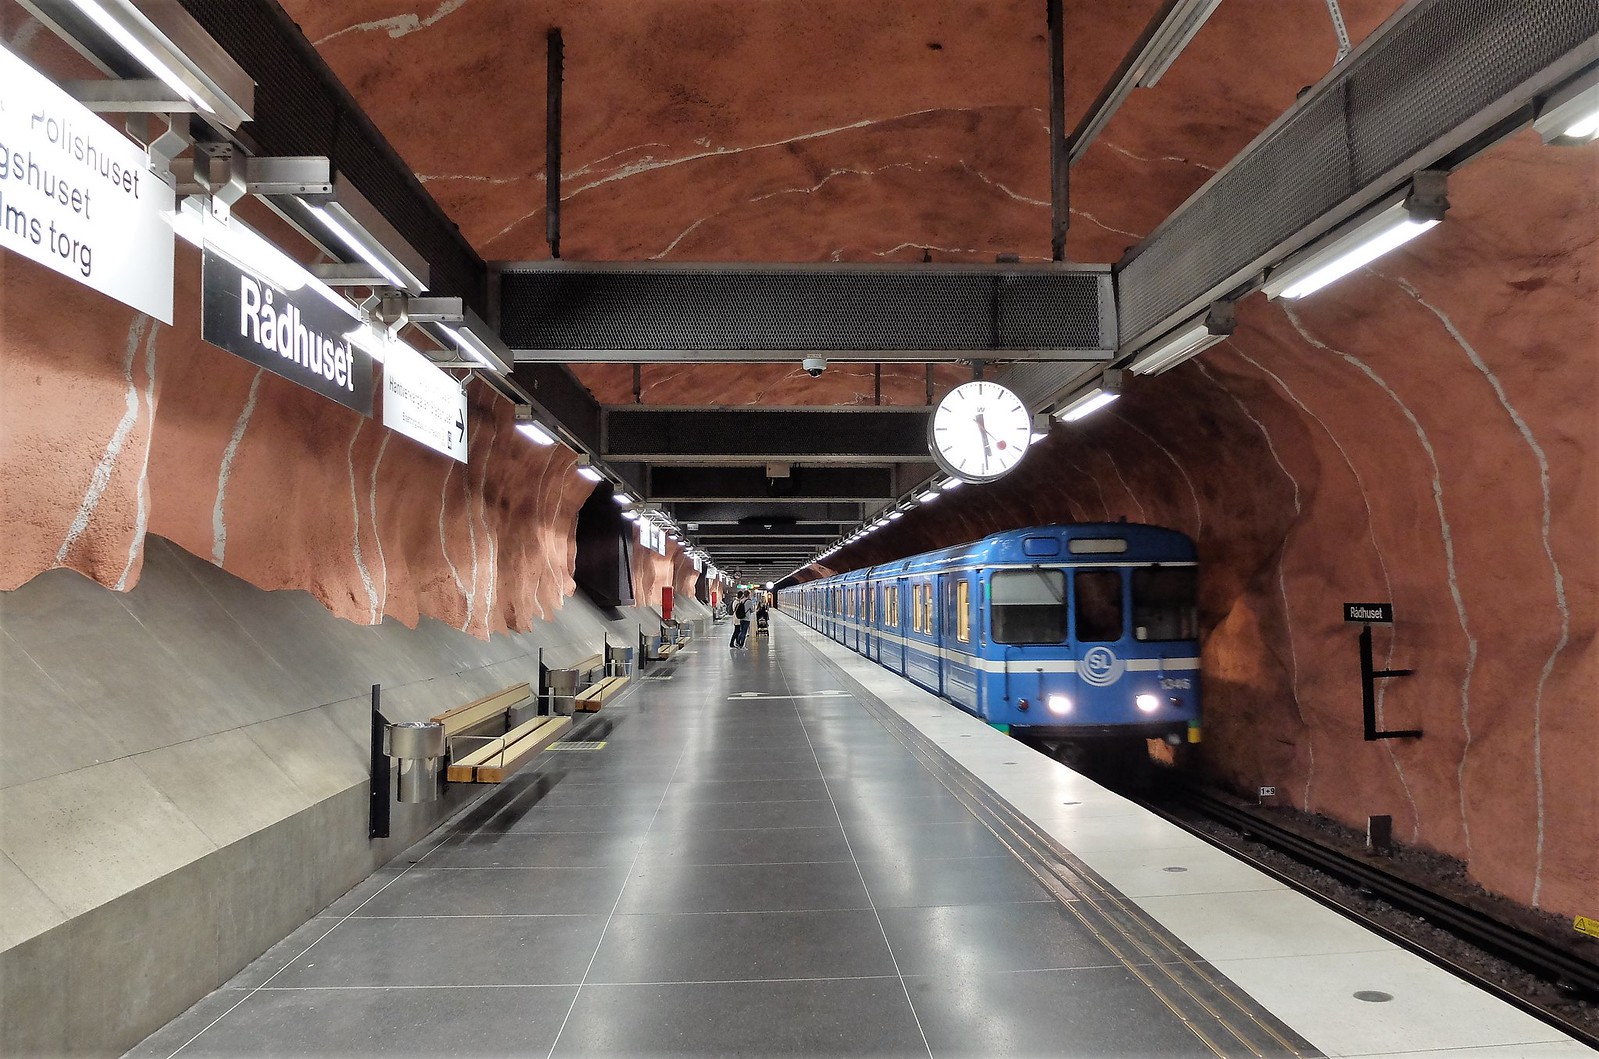 Как назвать метро. Метро станция Стокгольм Тенста. Станция метро Родхусет, Стокгольм. Станции метро Стокгольма Solna. Radhuset станция метро.